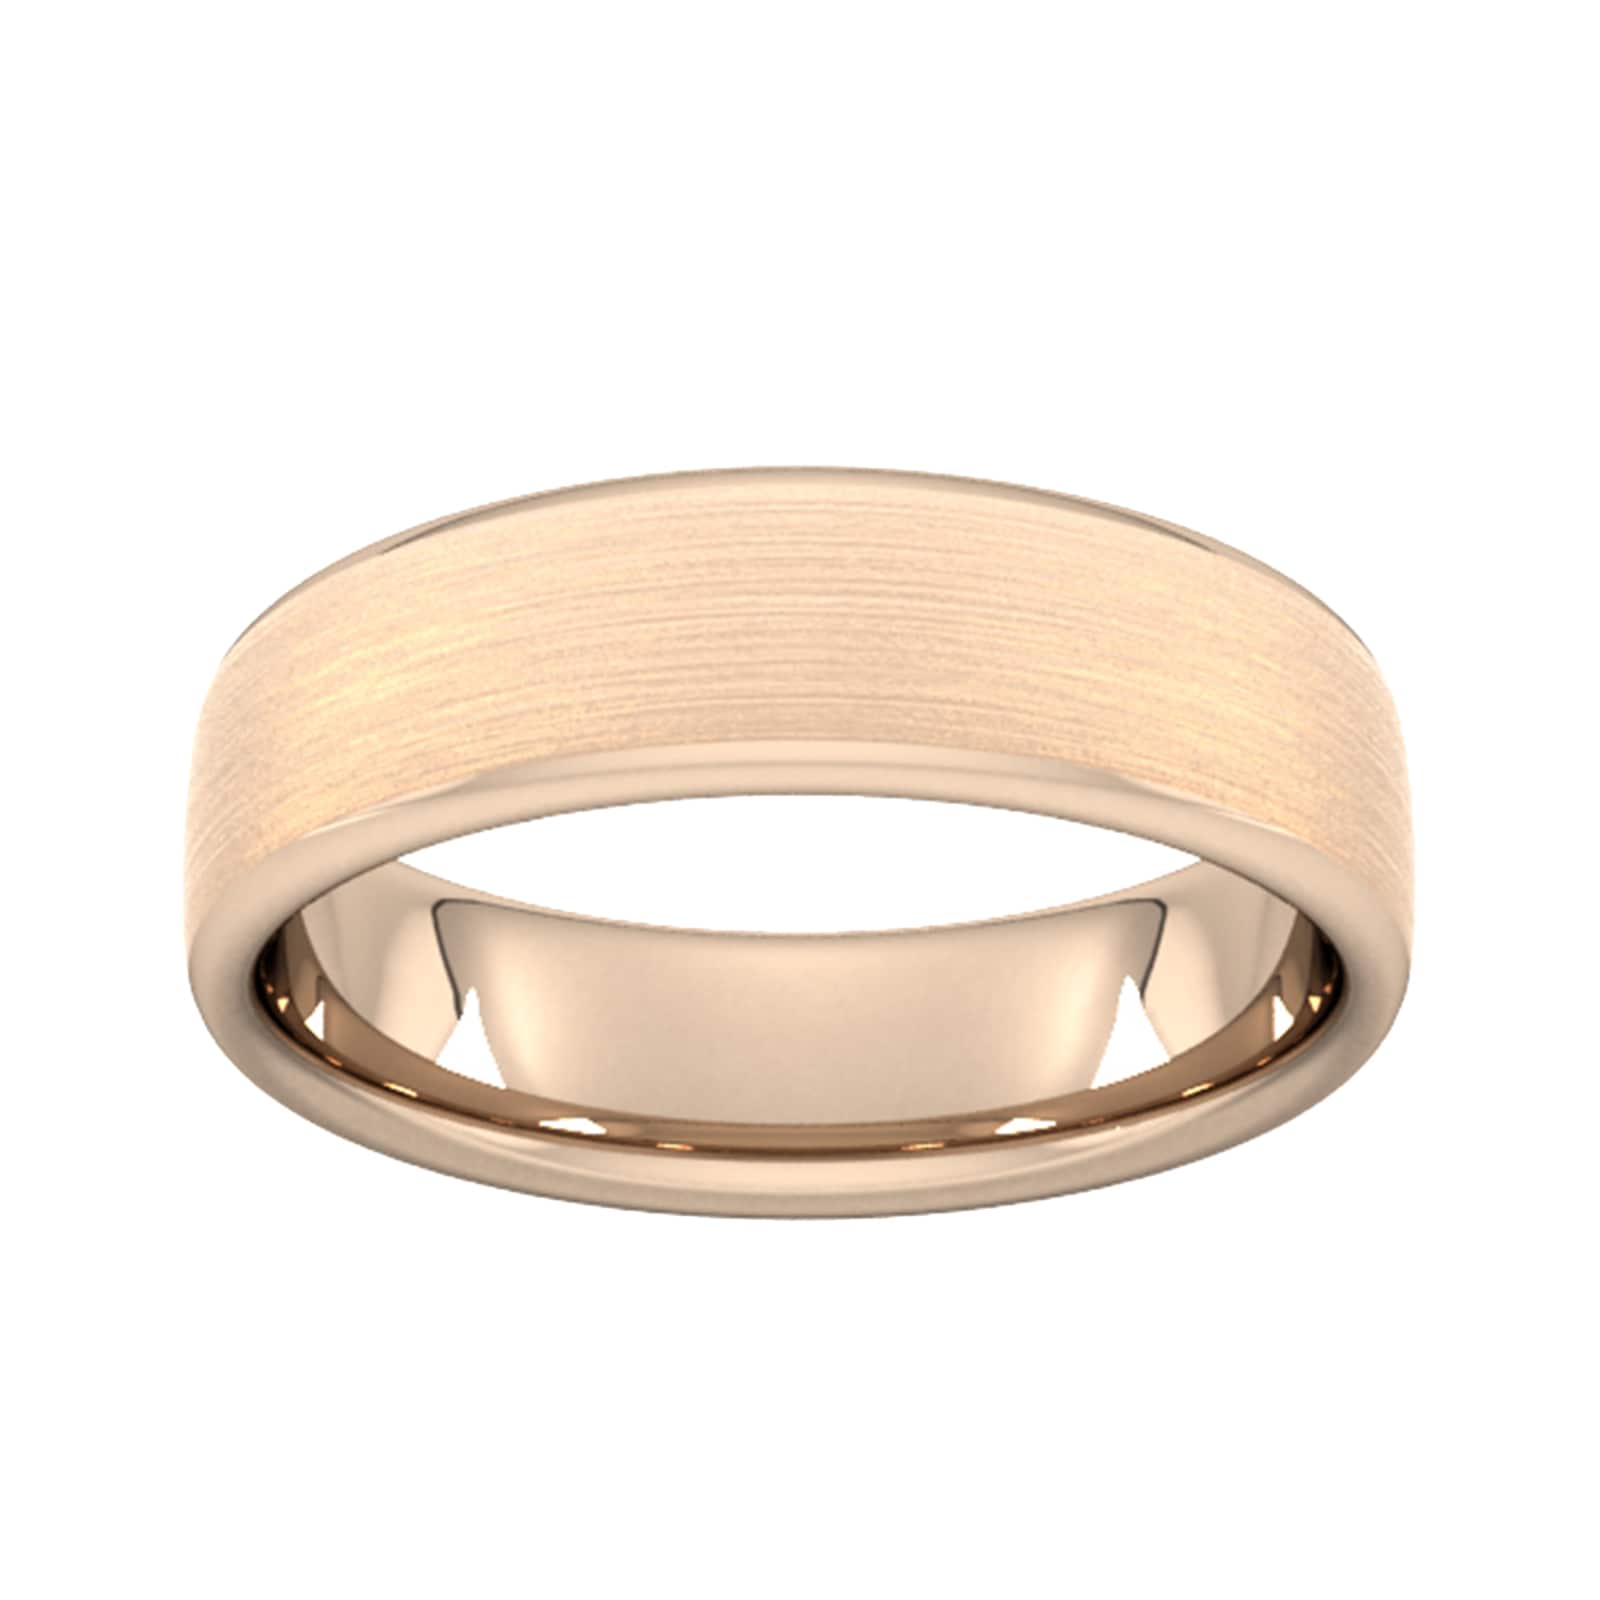 6mm Slight Court Standard Matt Finished Wedding Ring In 18 Carat Rose Gold - Ring Size K